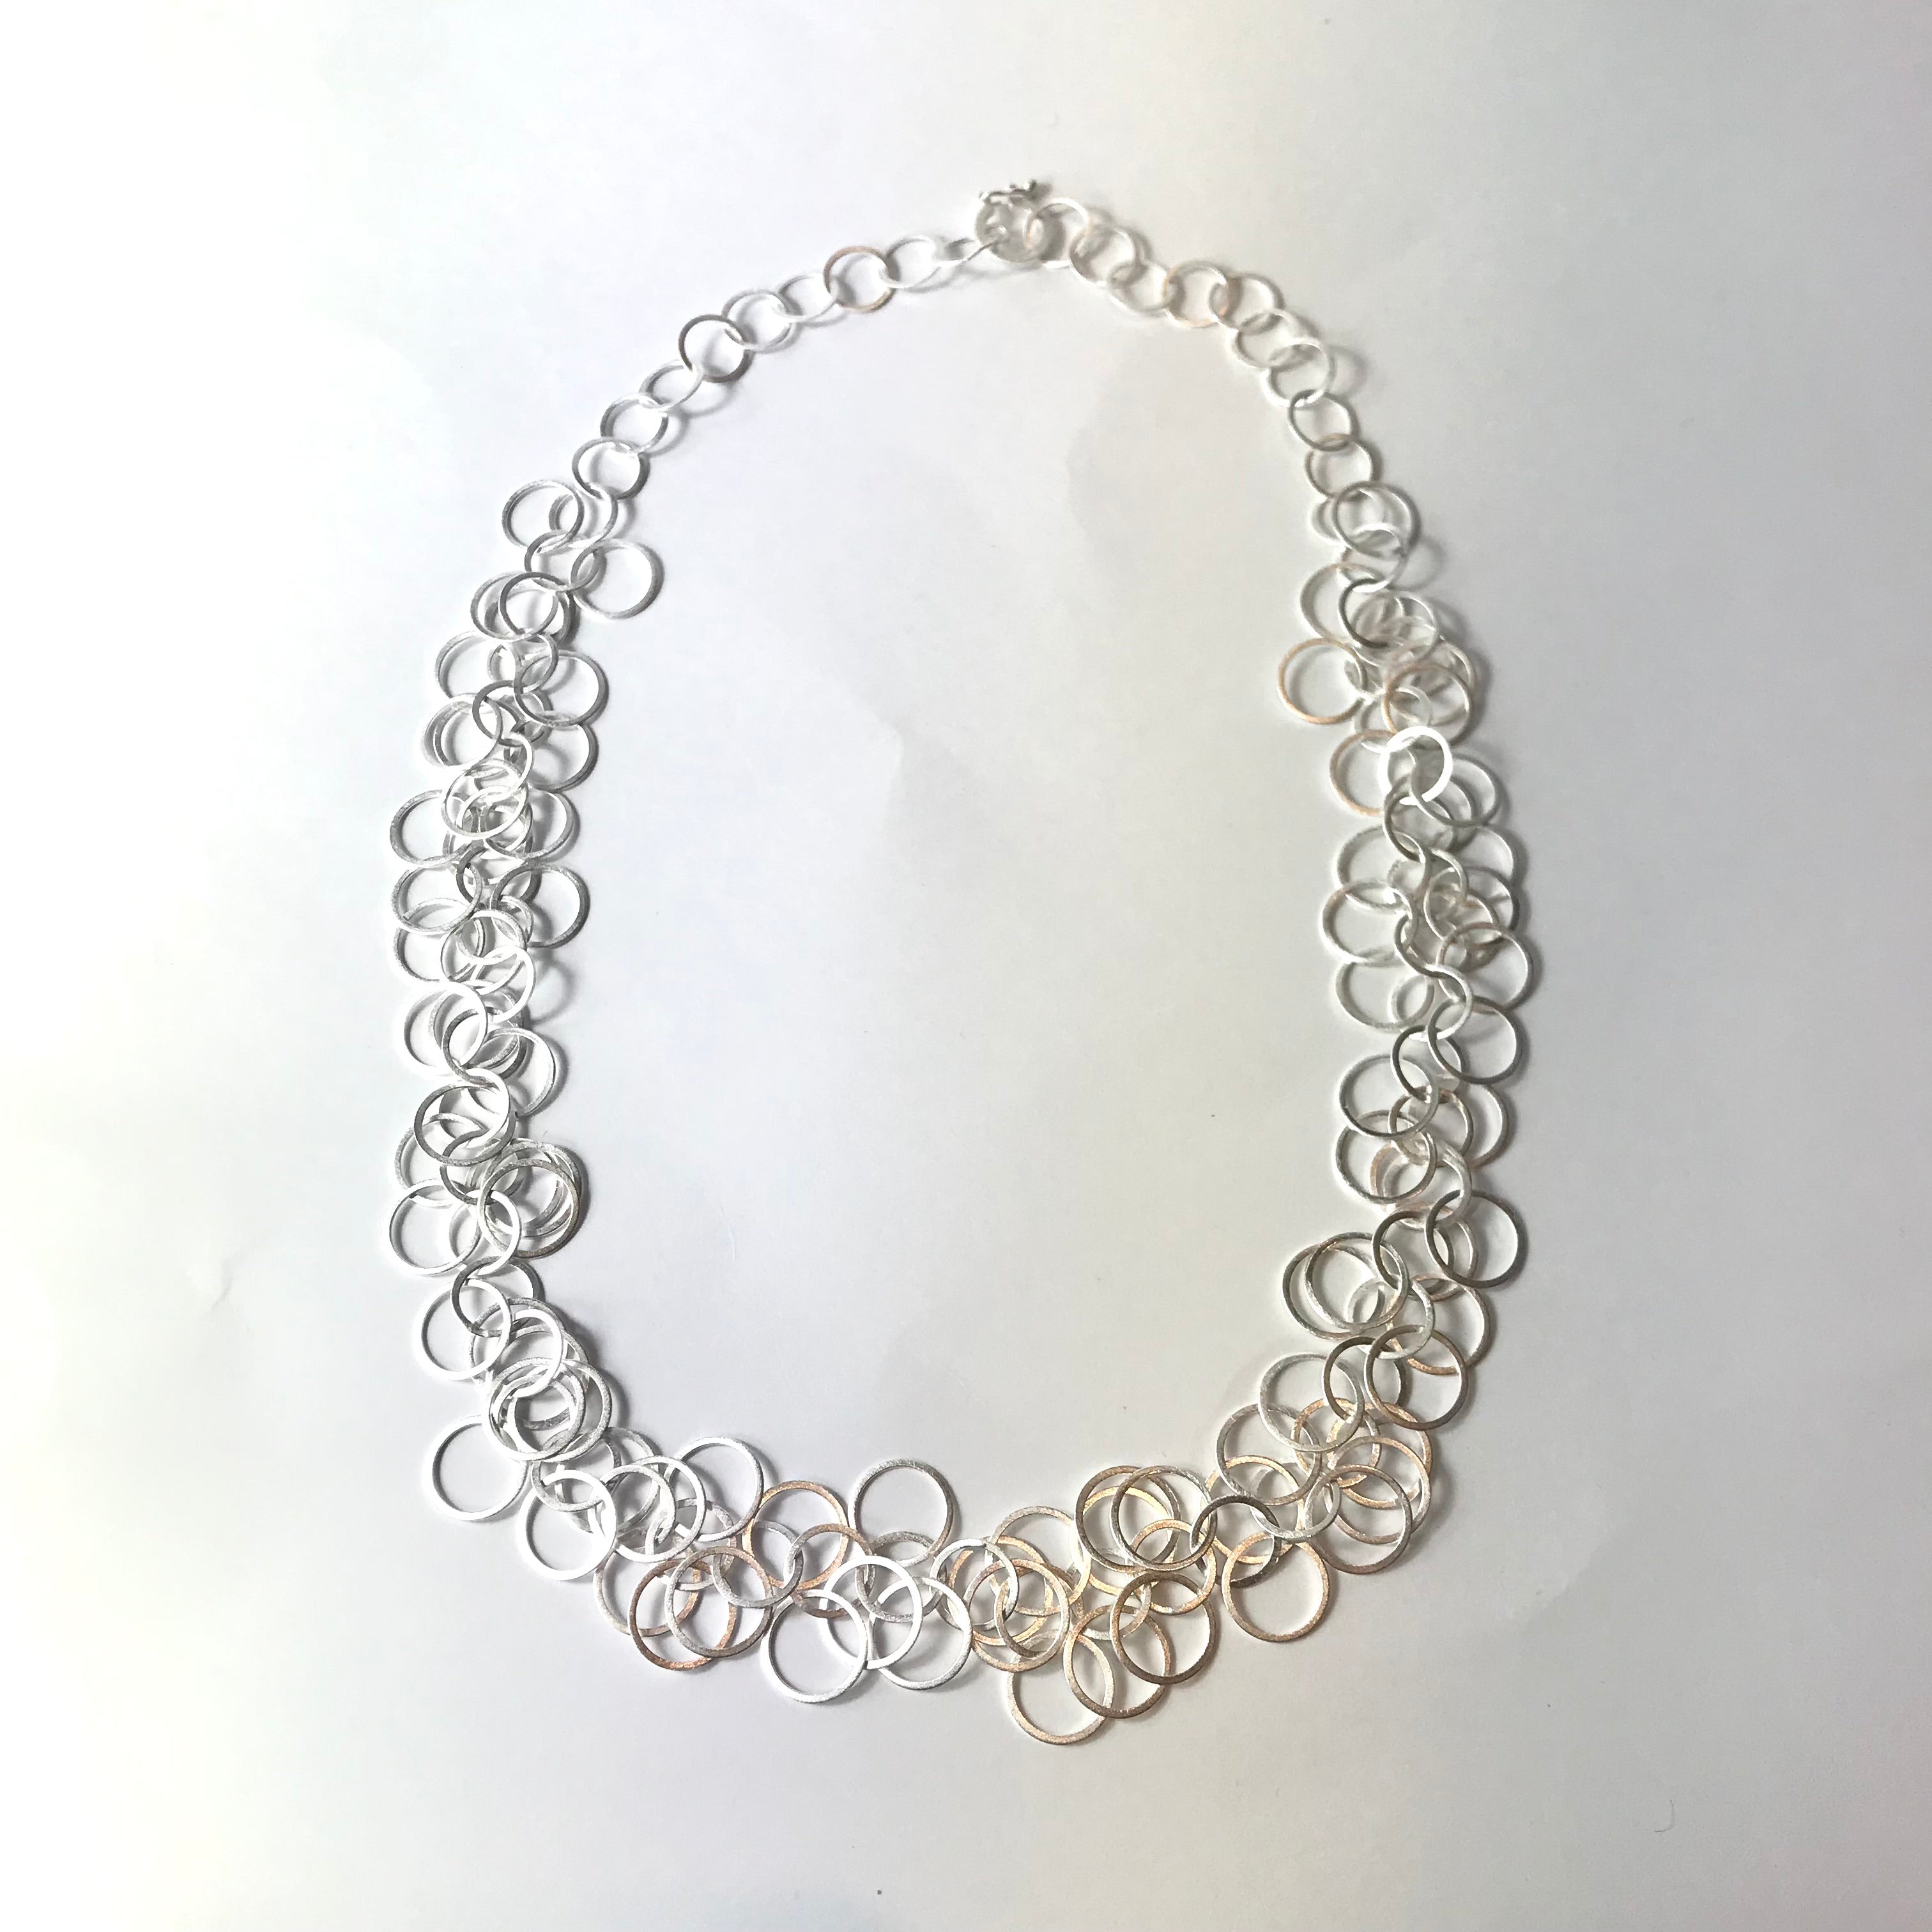 Silver Necklace - The Nancy Smillie Shop - Art, Jewellery & Designer Gifts Glasgow